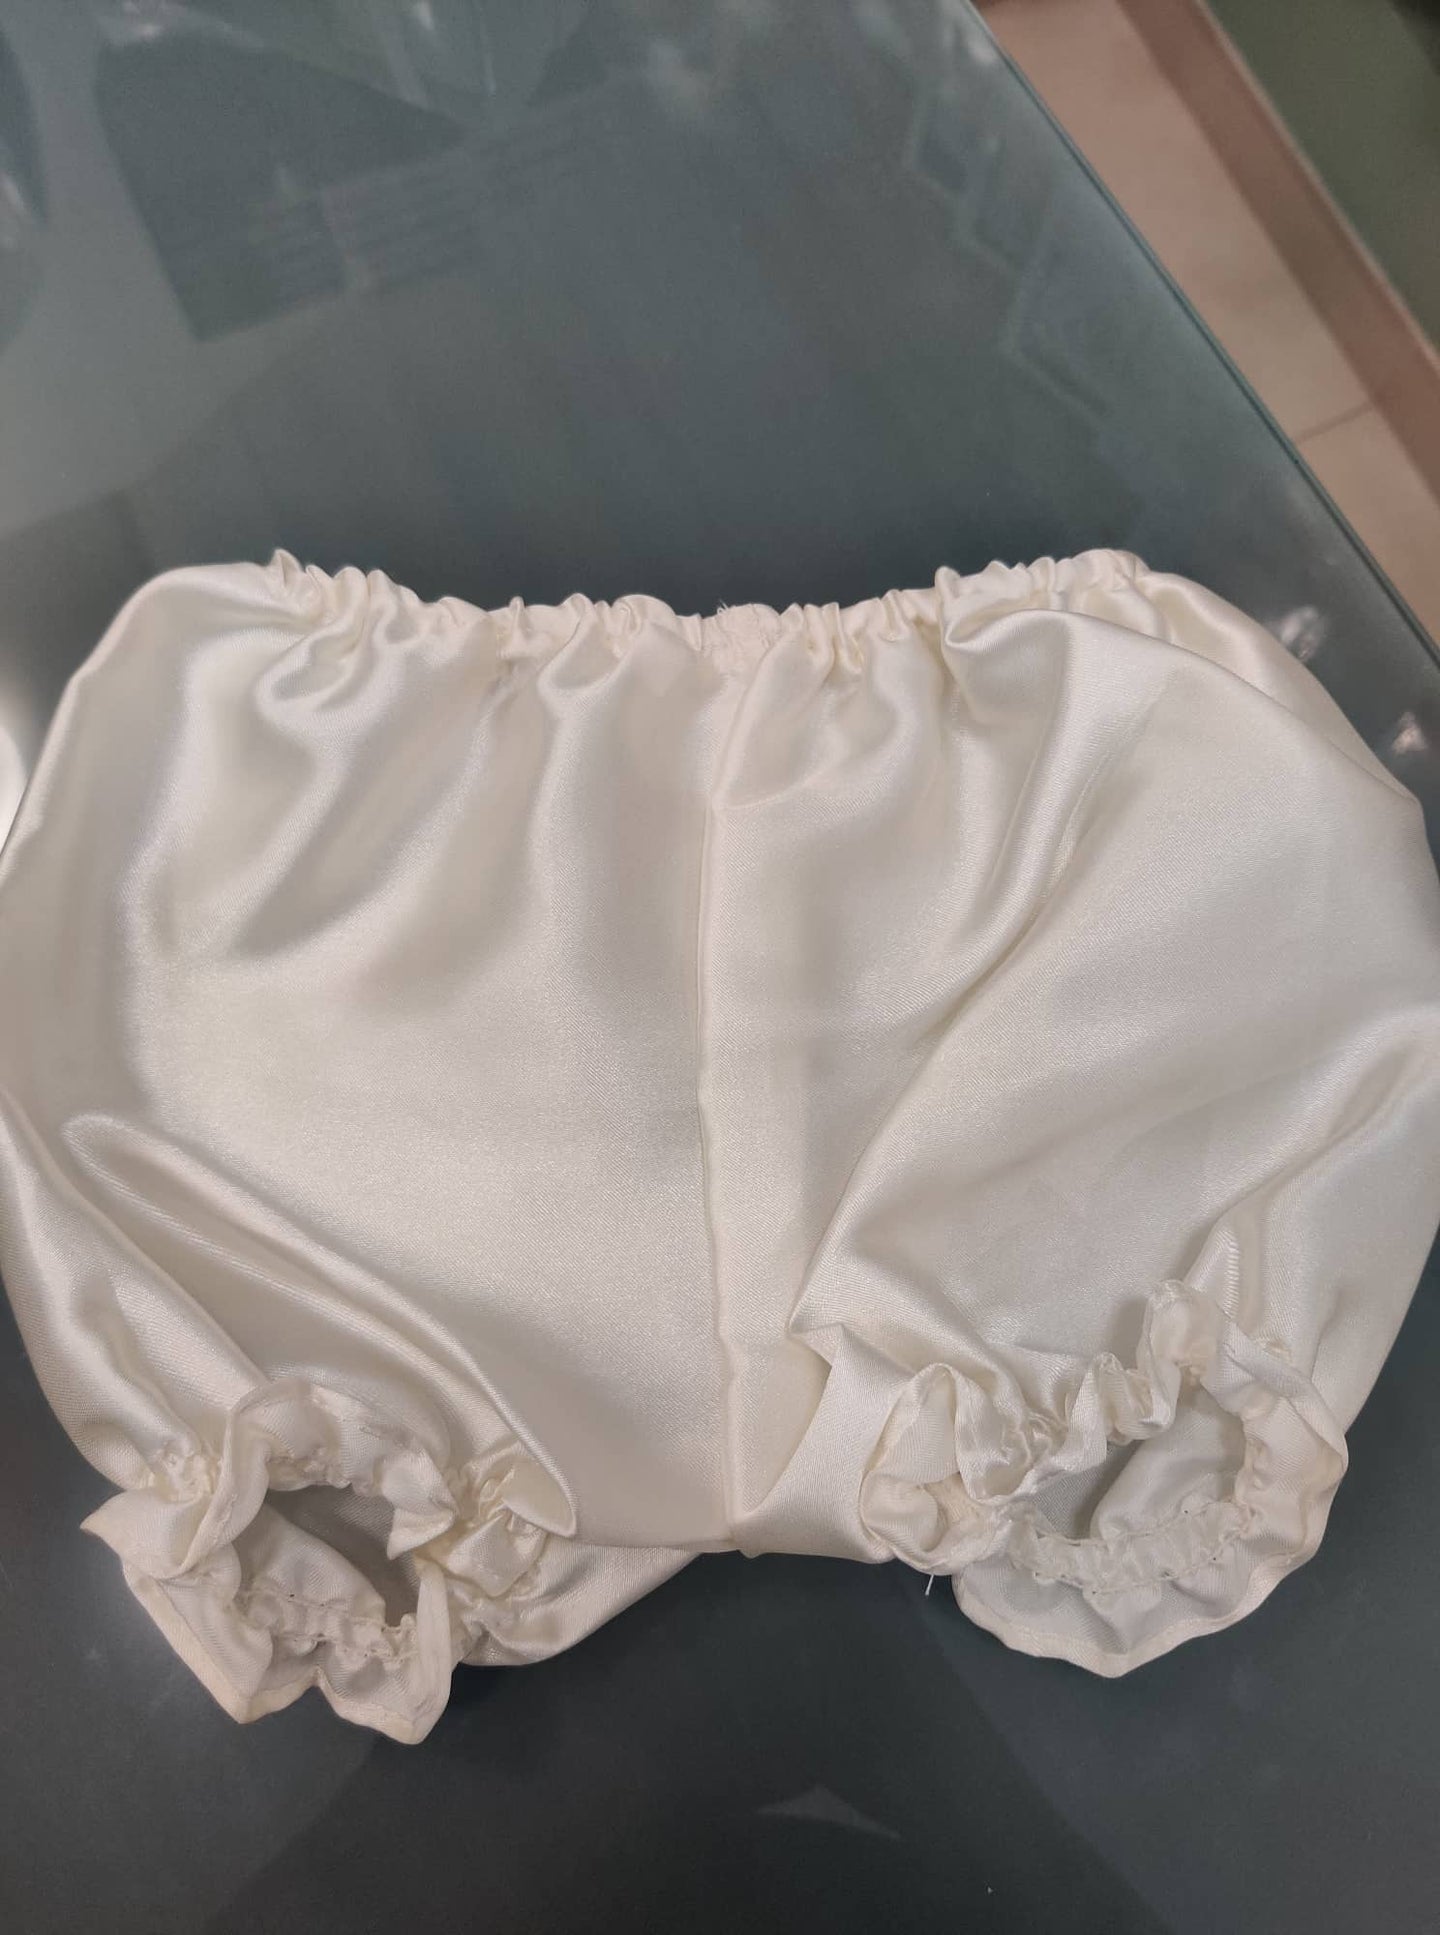 Plain underpants (cream/white)